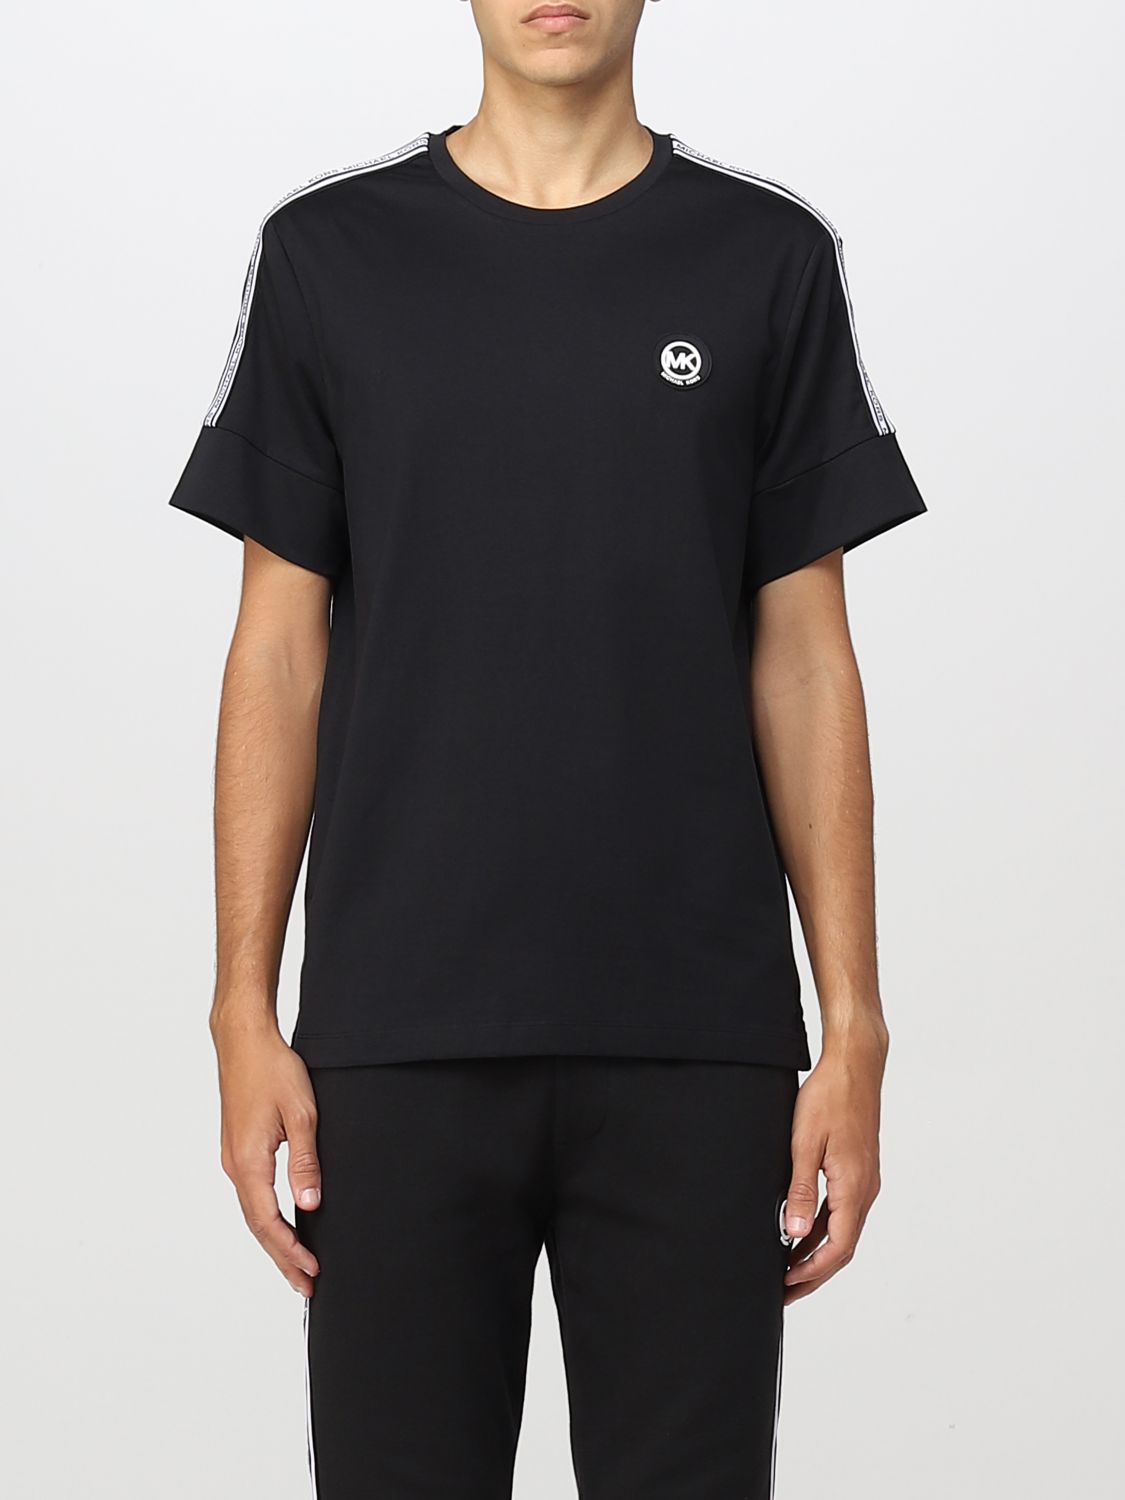 MICHAEL KORS: t-shirt for man - Black | Michael Kors t-shirt CS250Q91V2 ...